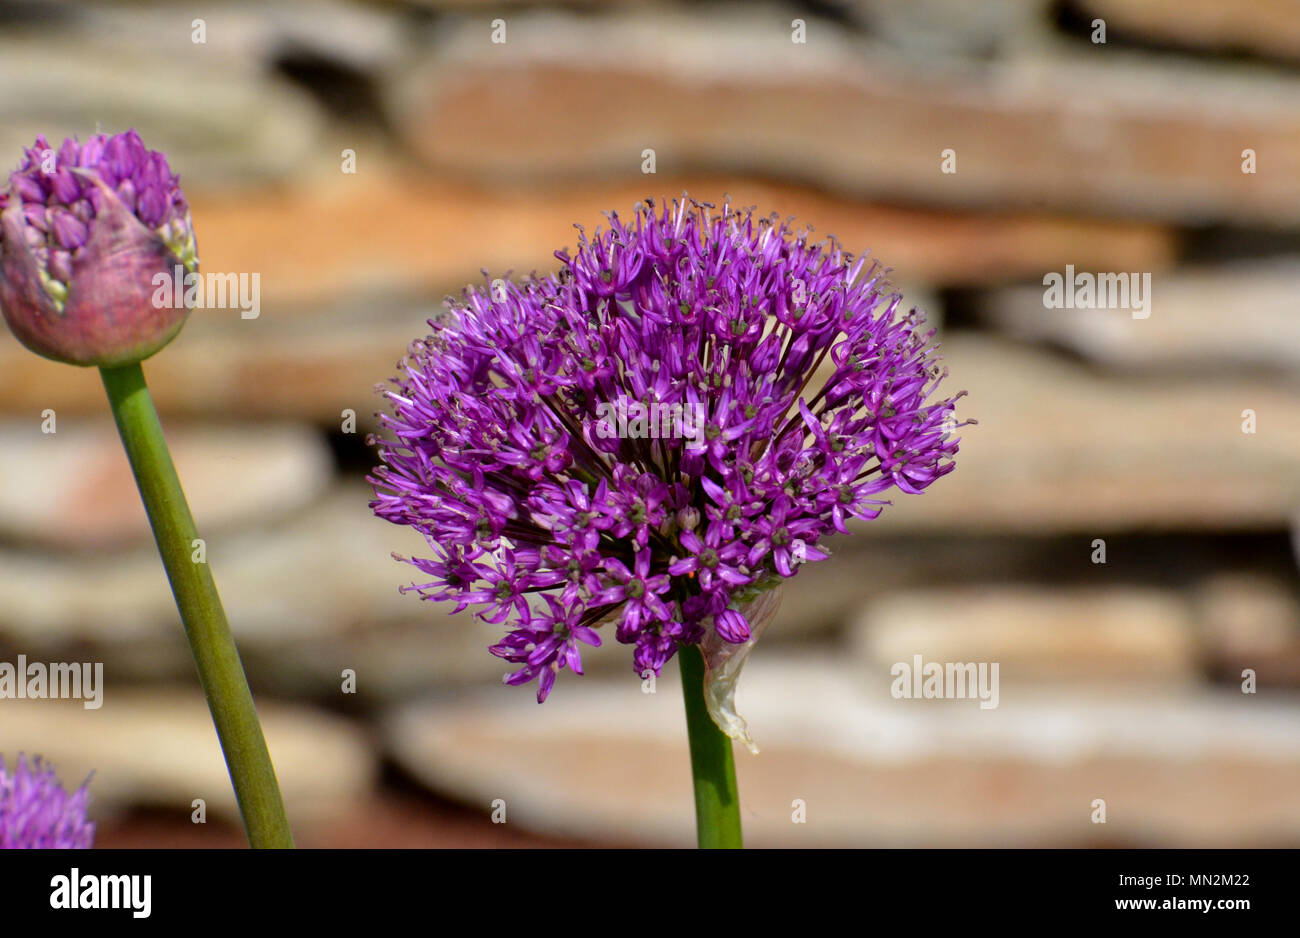 Purple alium flowers against background of stone wall Stock Photo